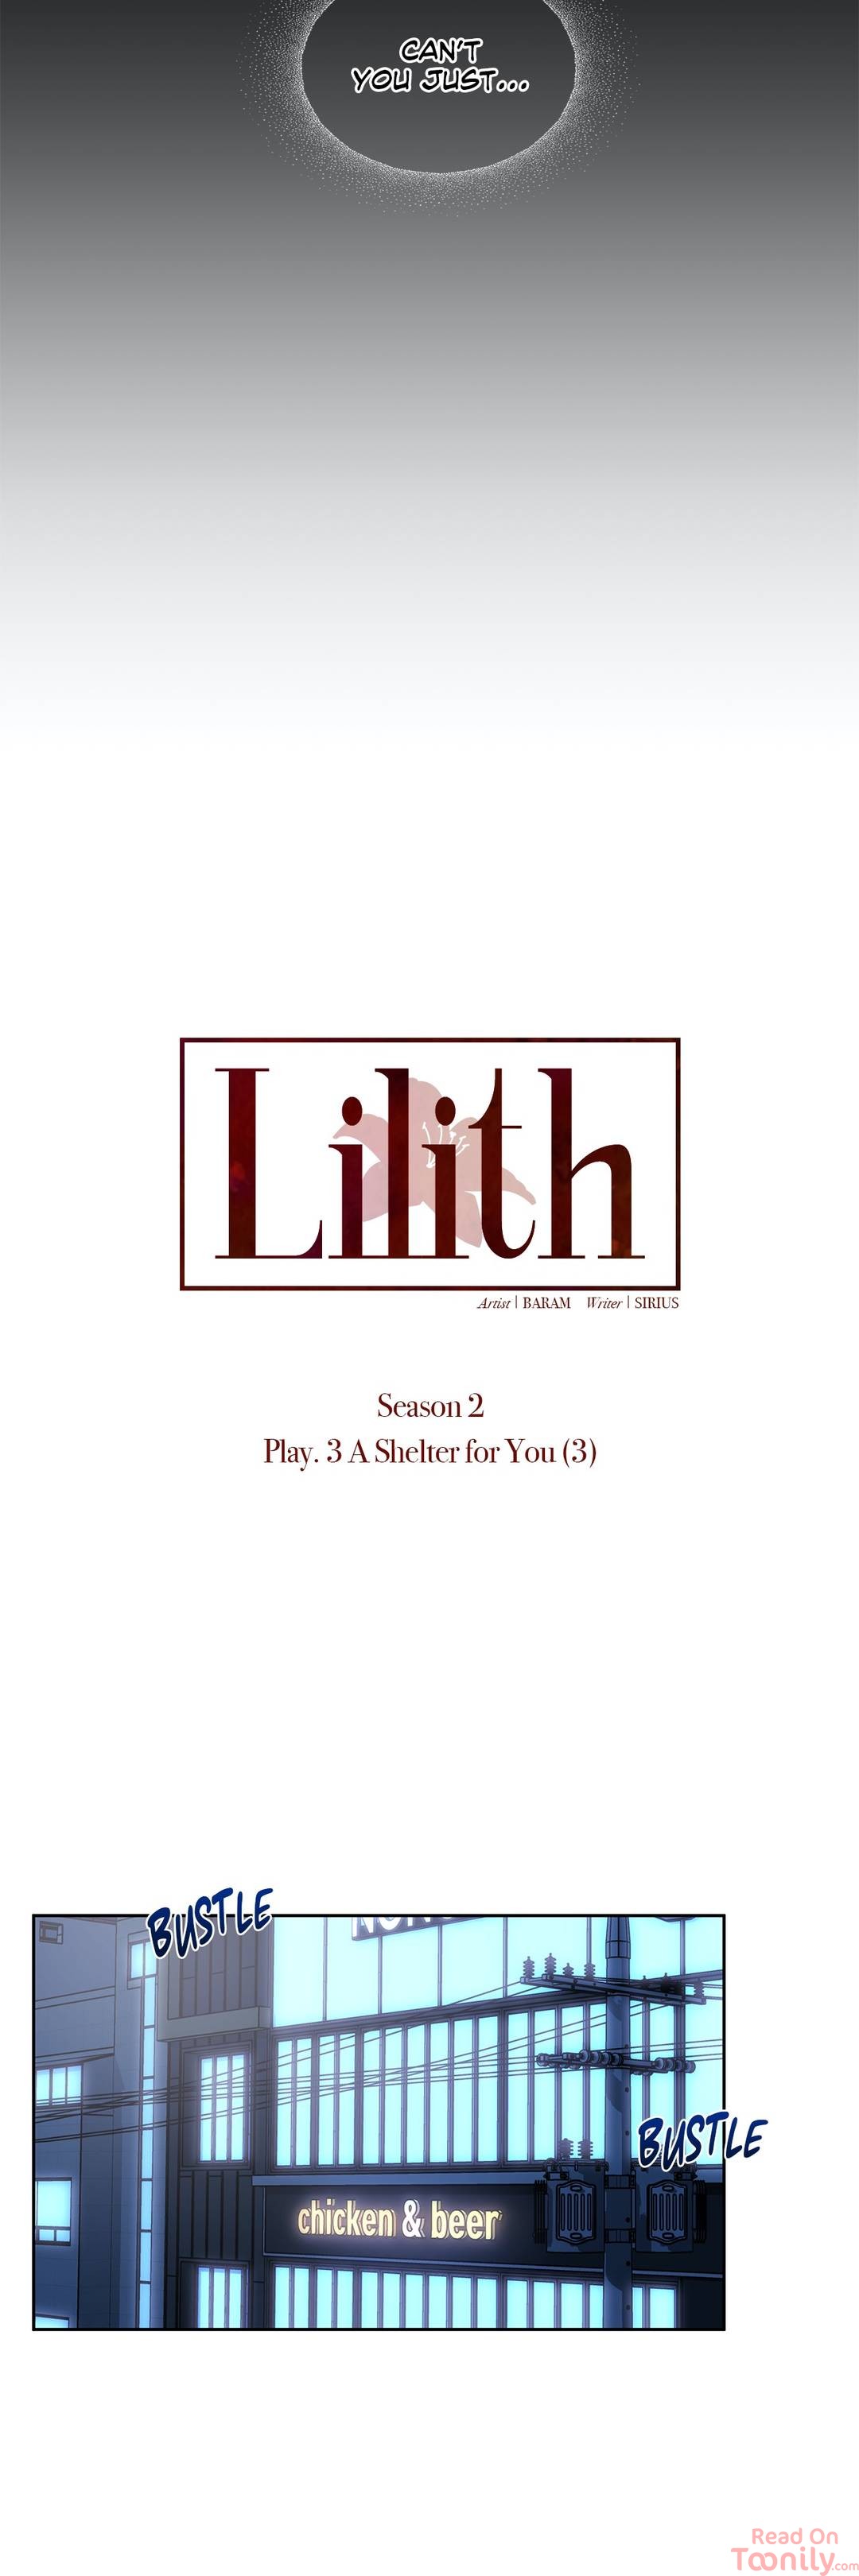 Lilith 2 image